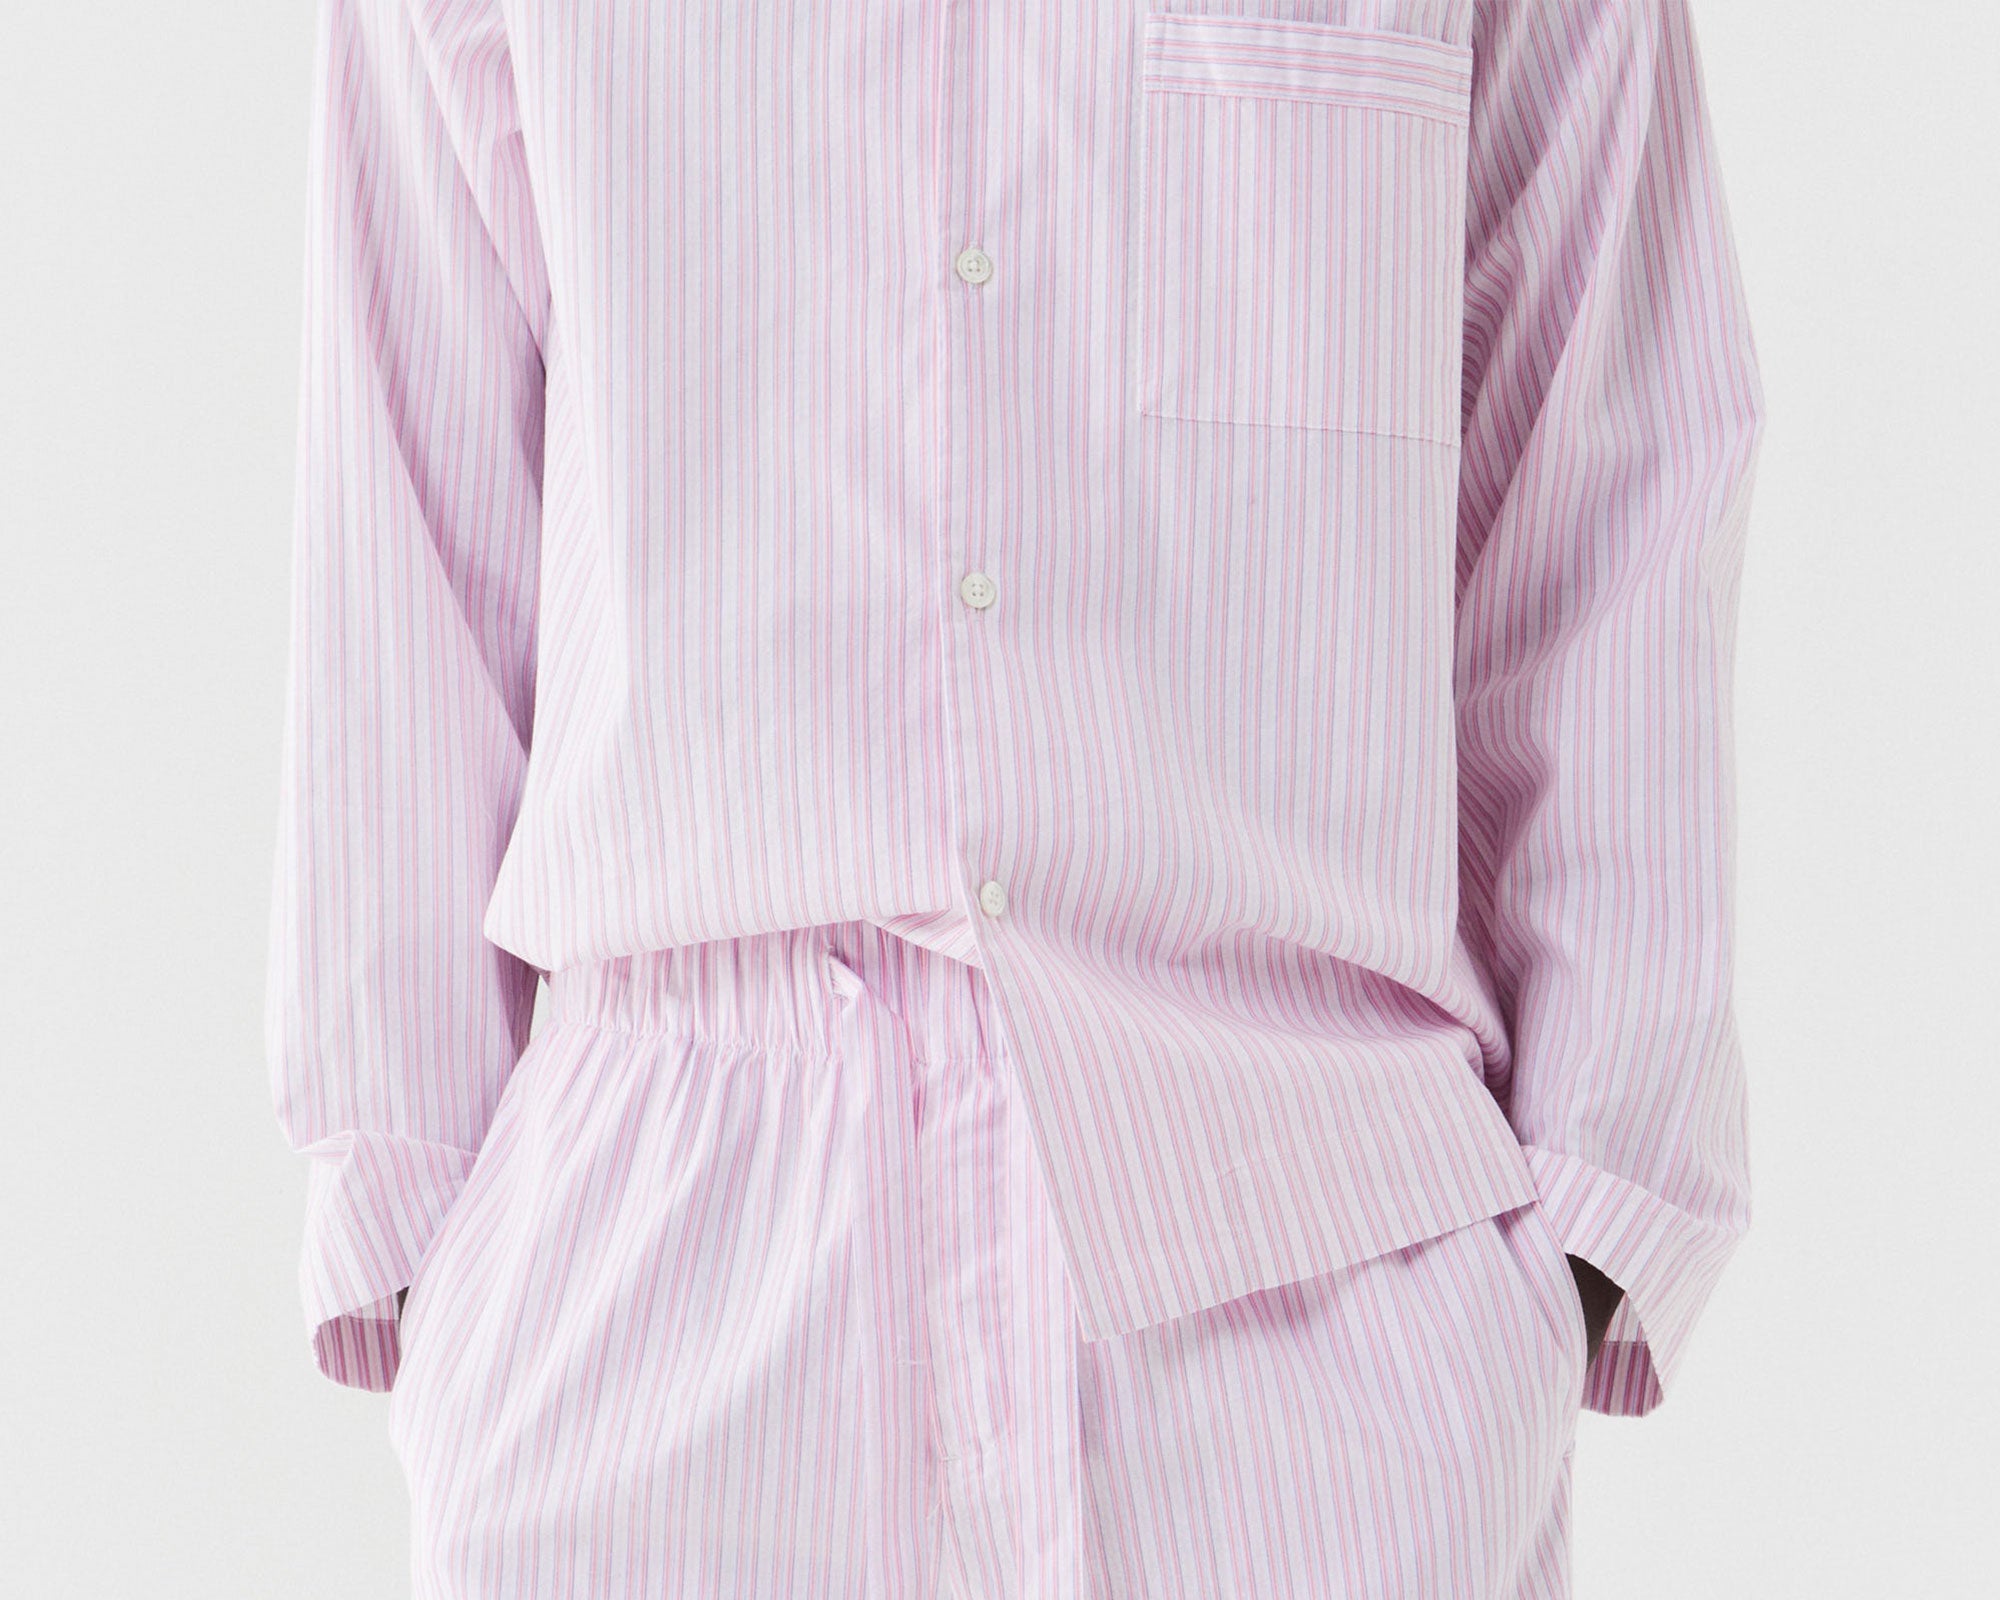 Tekla Poplin Long Sleeve Shirt - Capri Stripes